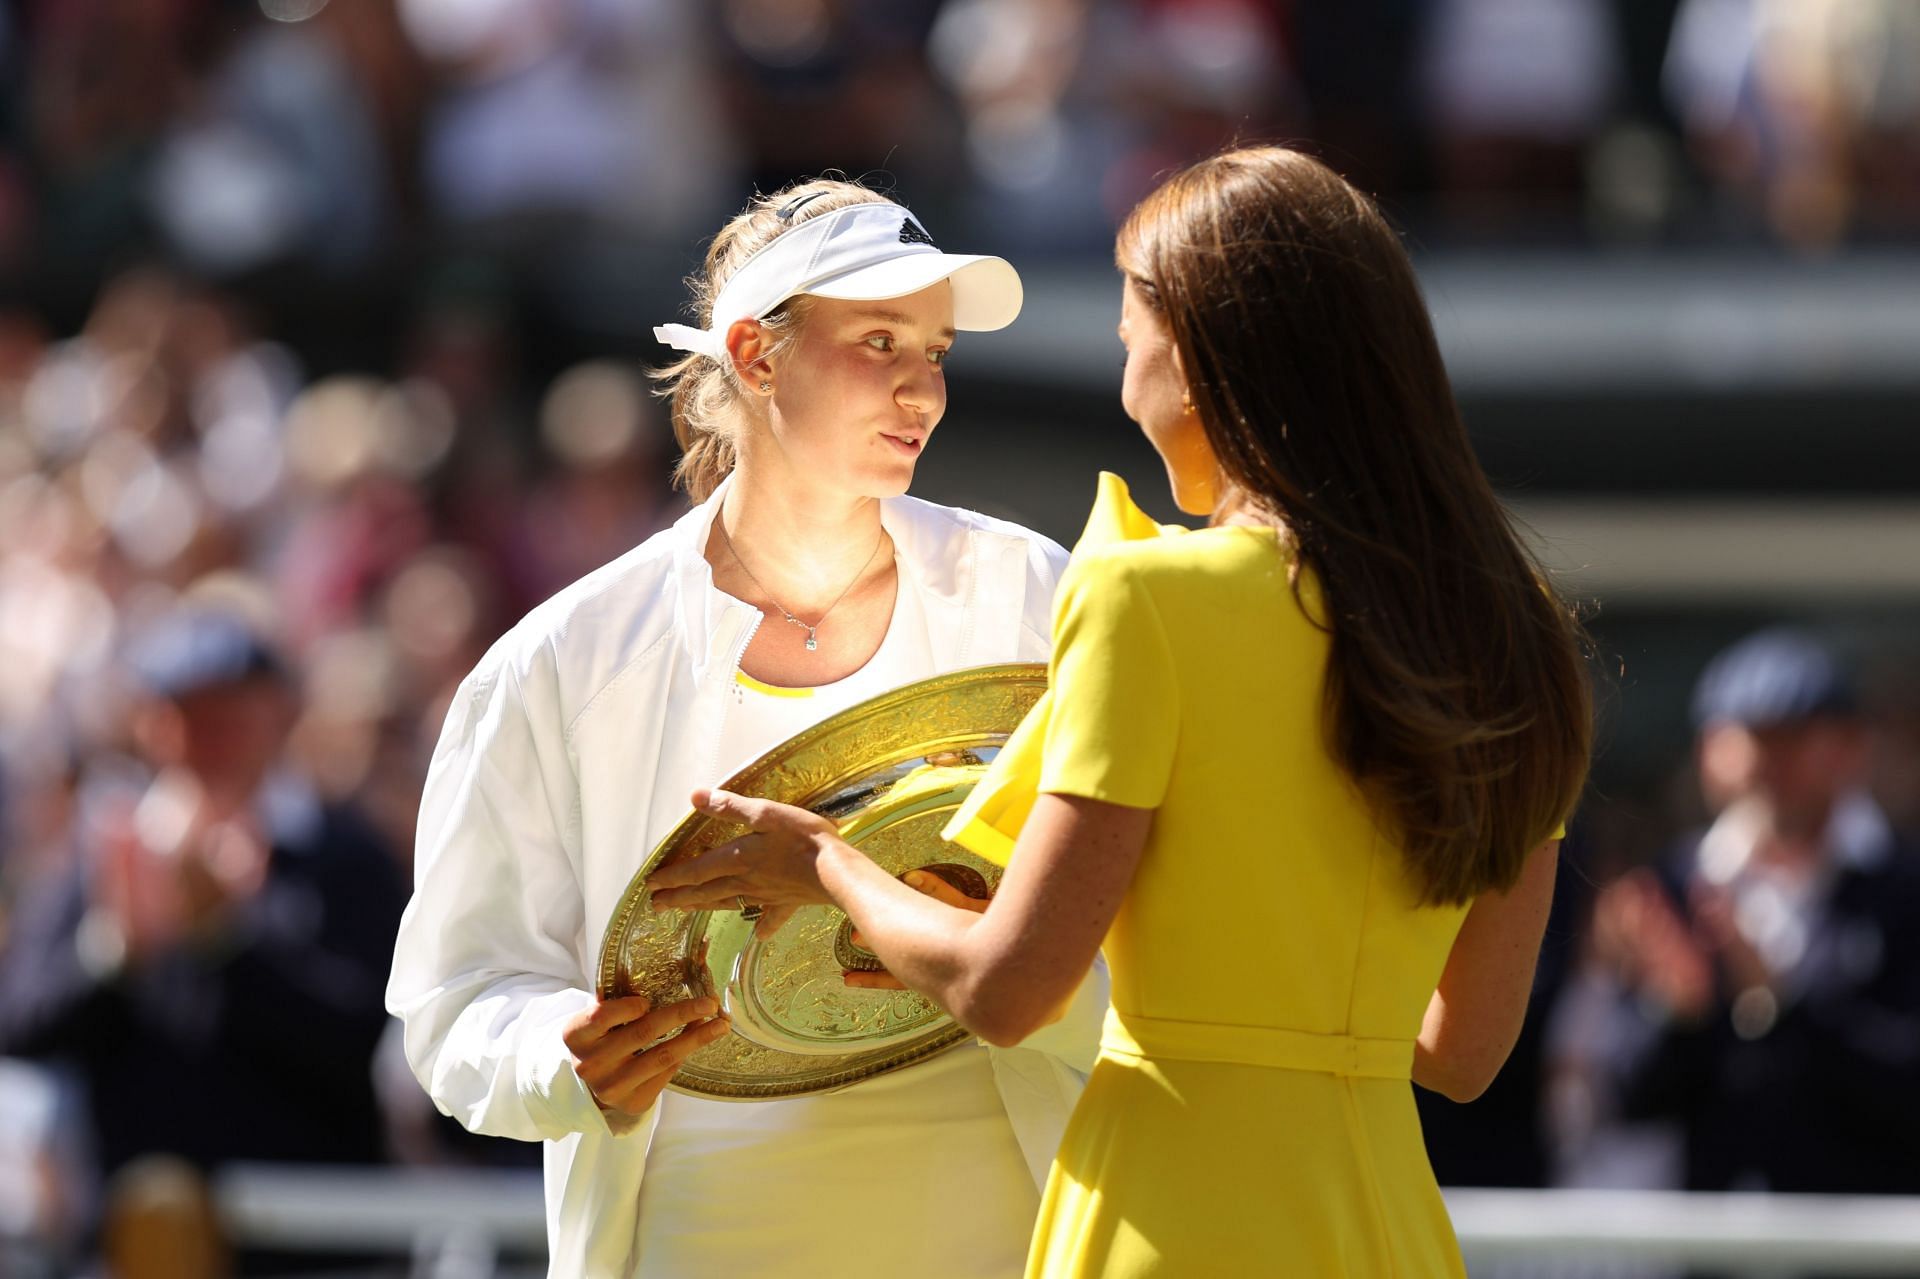 The Duchess of Cambridge presents the Venus Rosewater Dish to Wimbledon champion Elena Rybakina